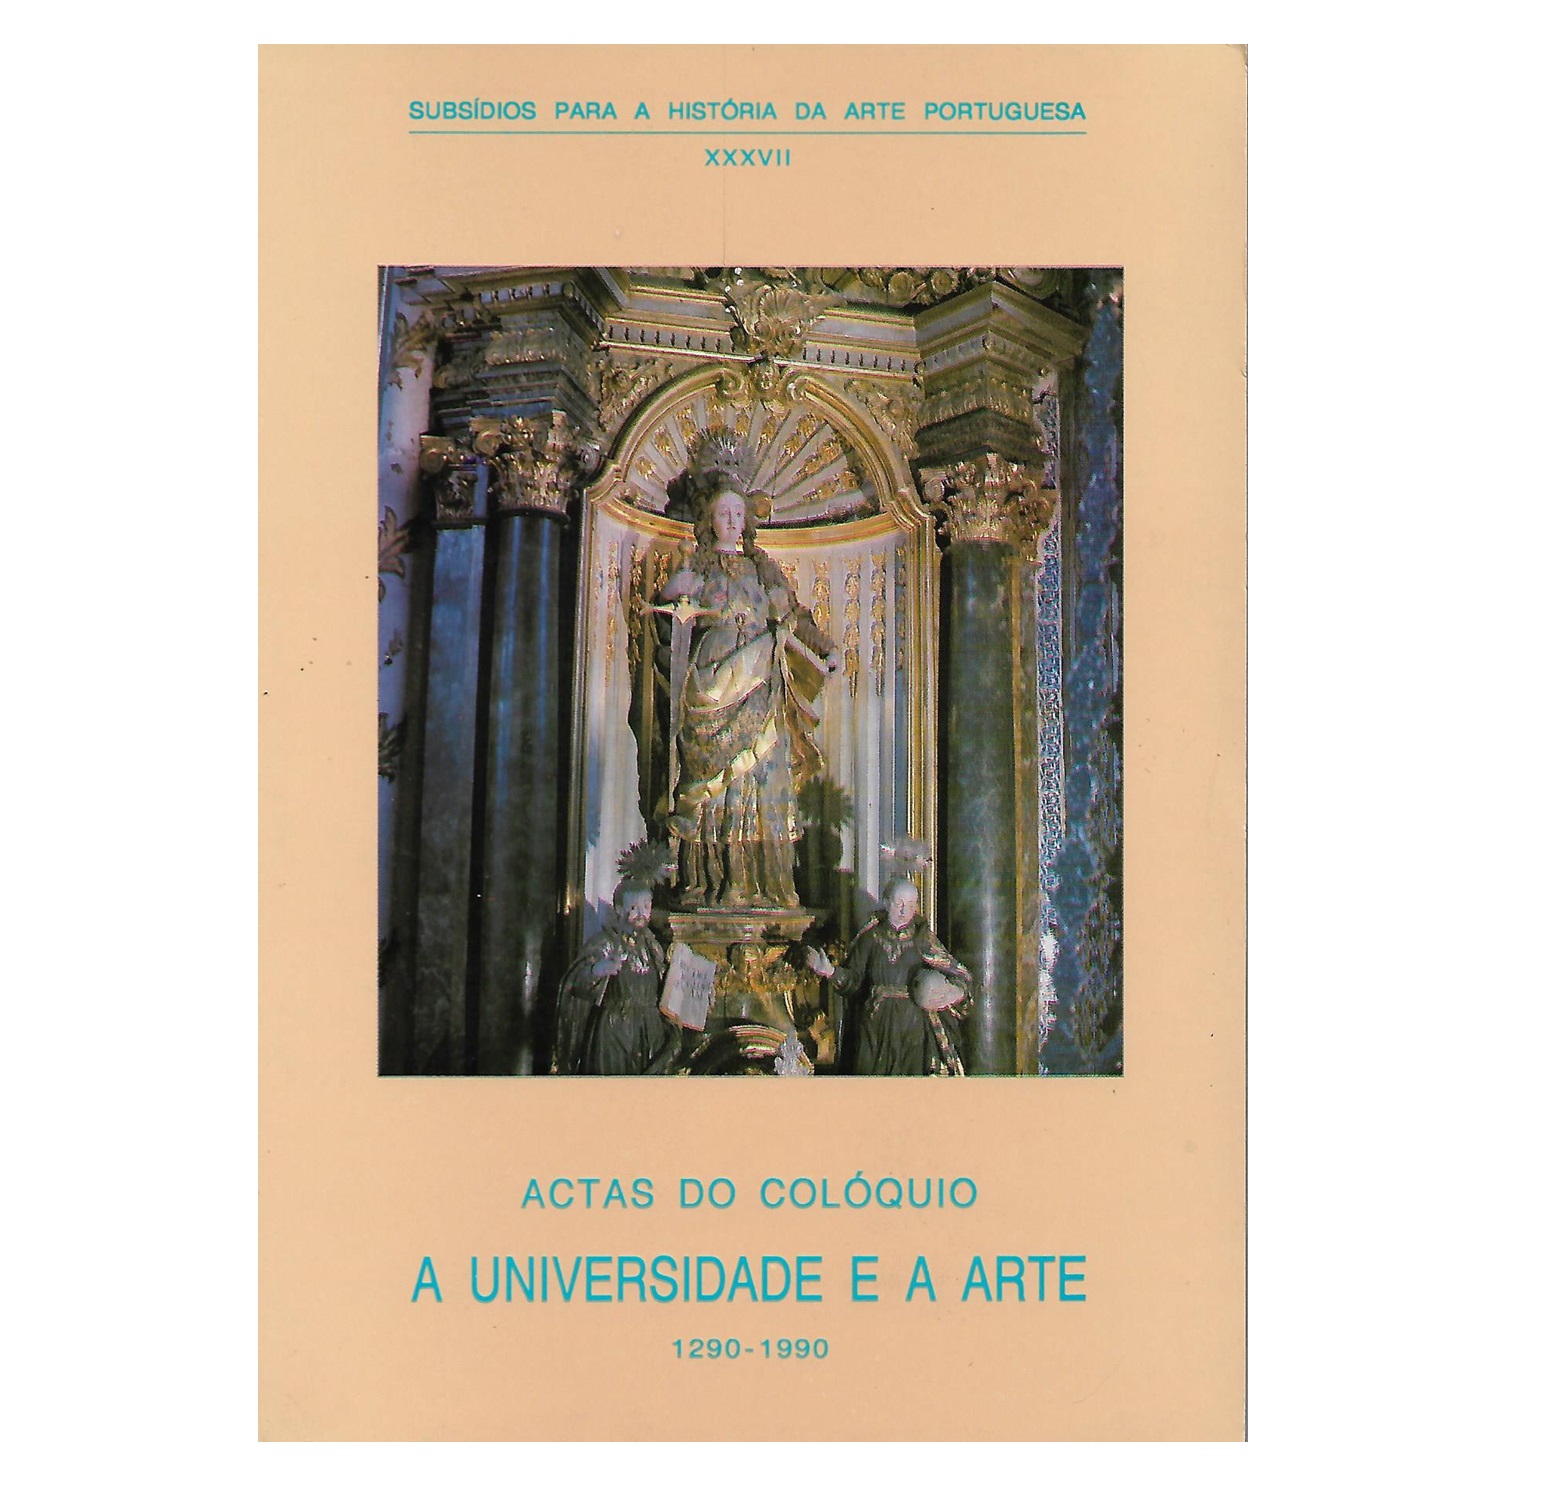 «A UNIVERSIDADE E A ARTE: 1290-1990»